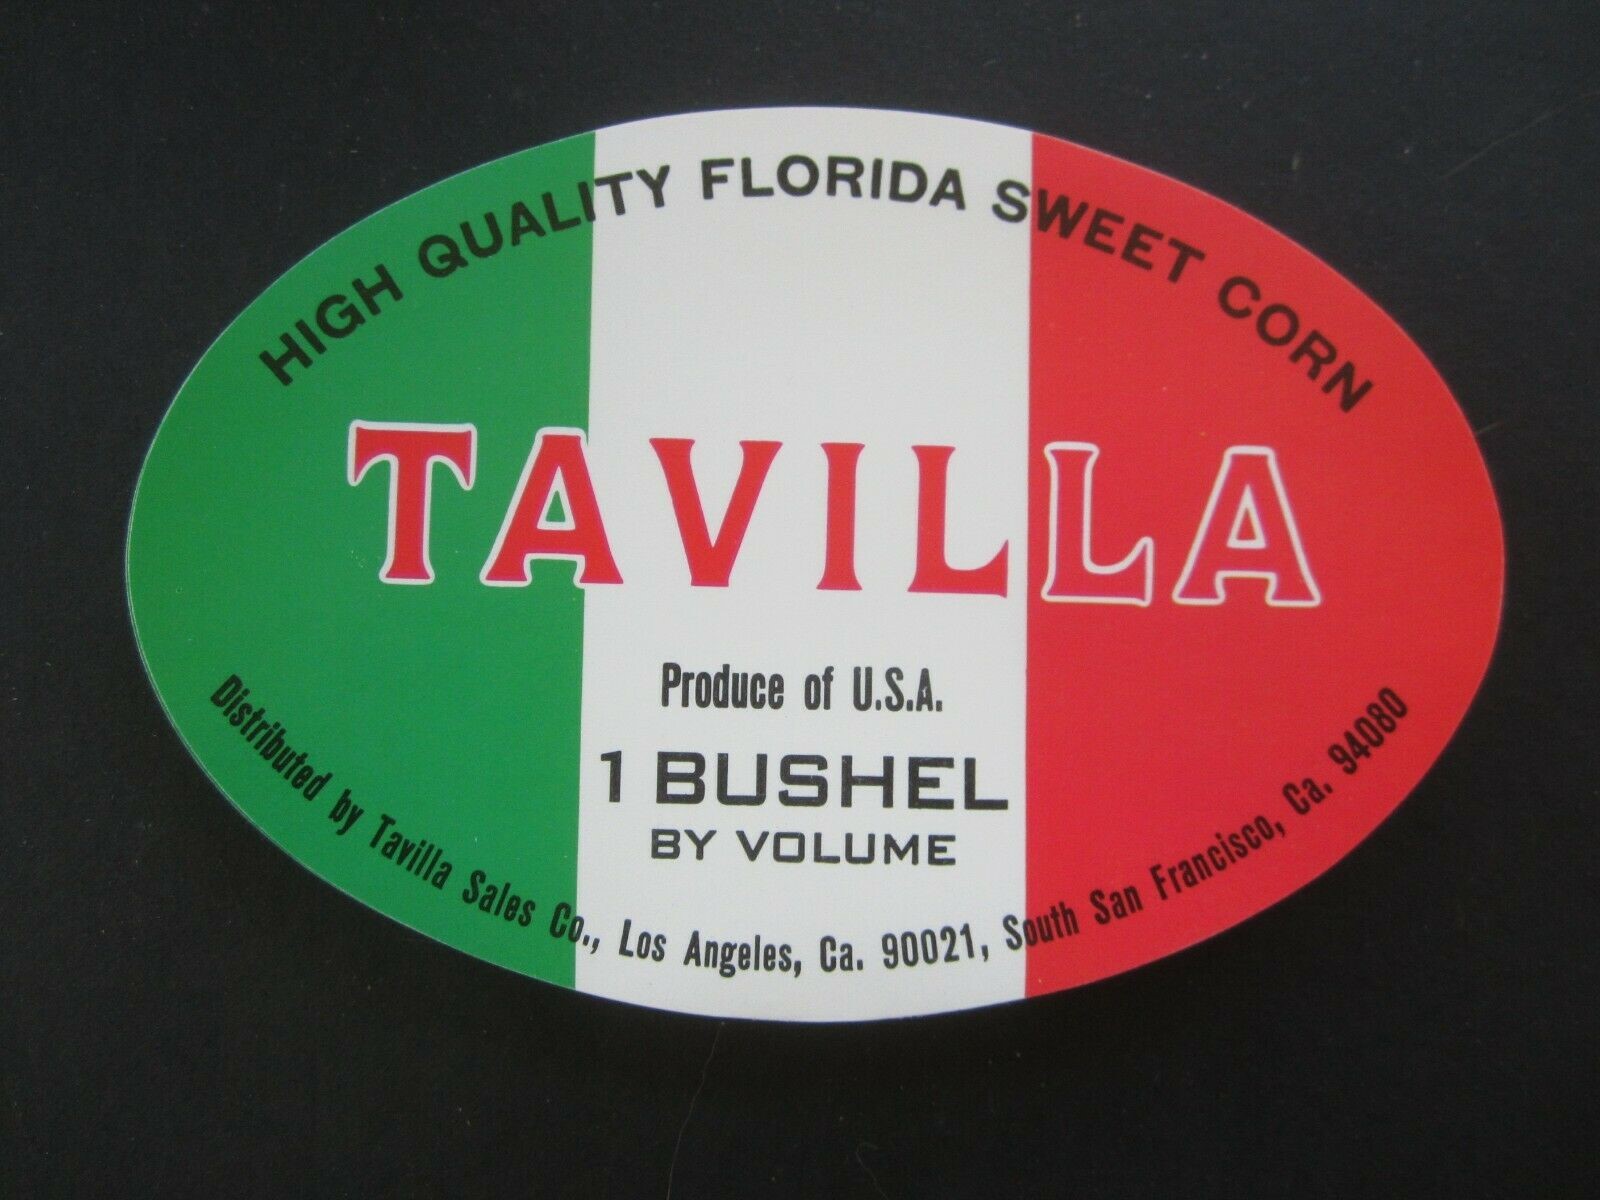  Lot of 100 Old Vintage - TAVILLA - Florida Swe...